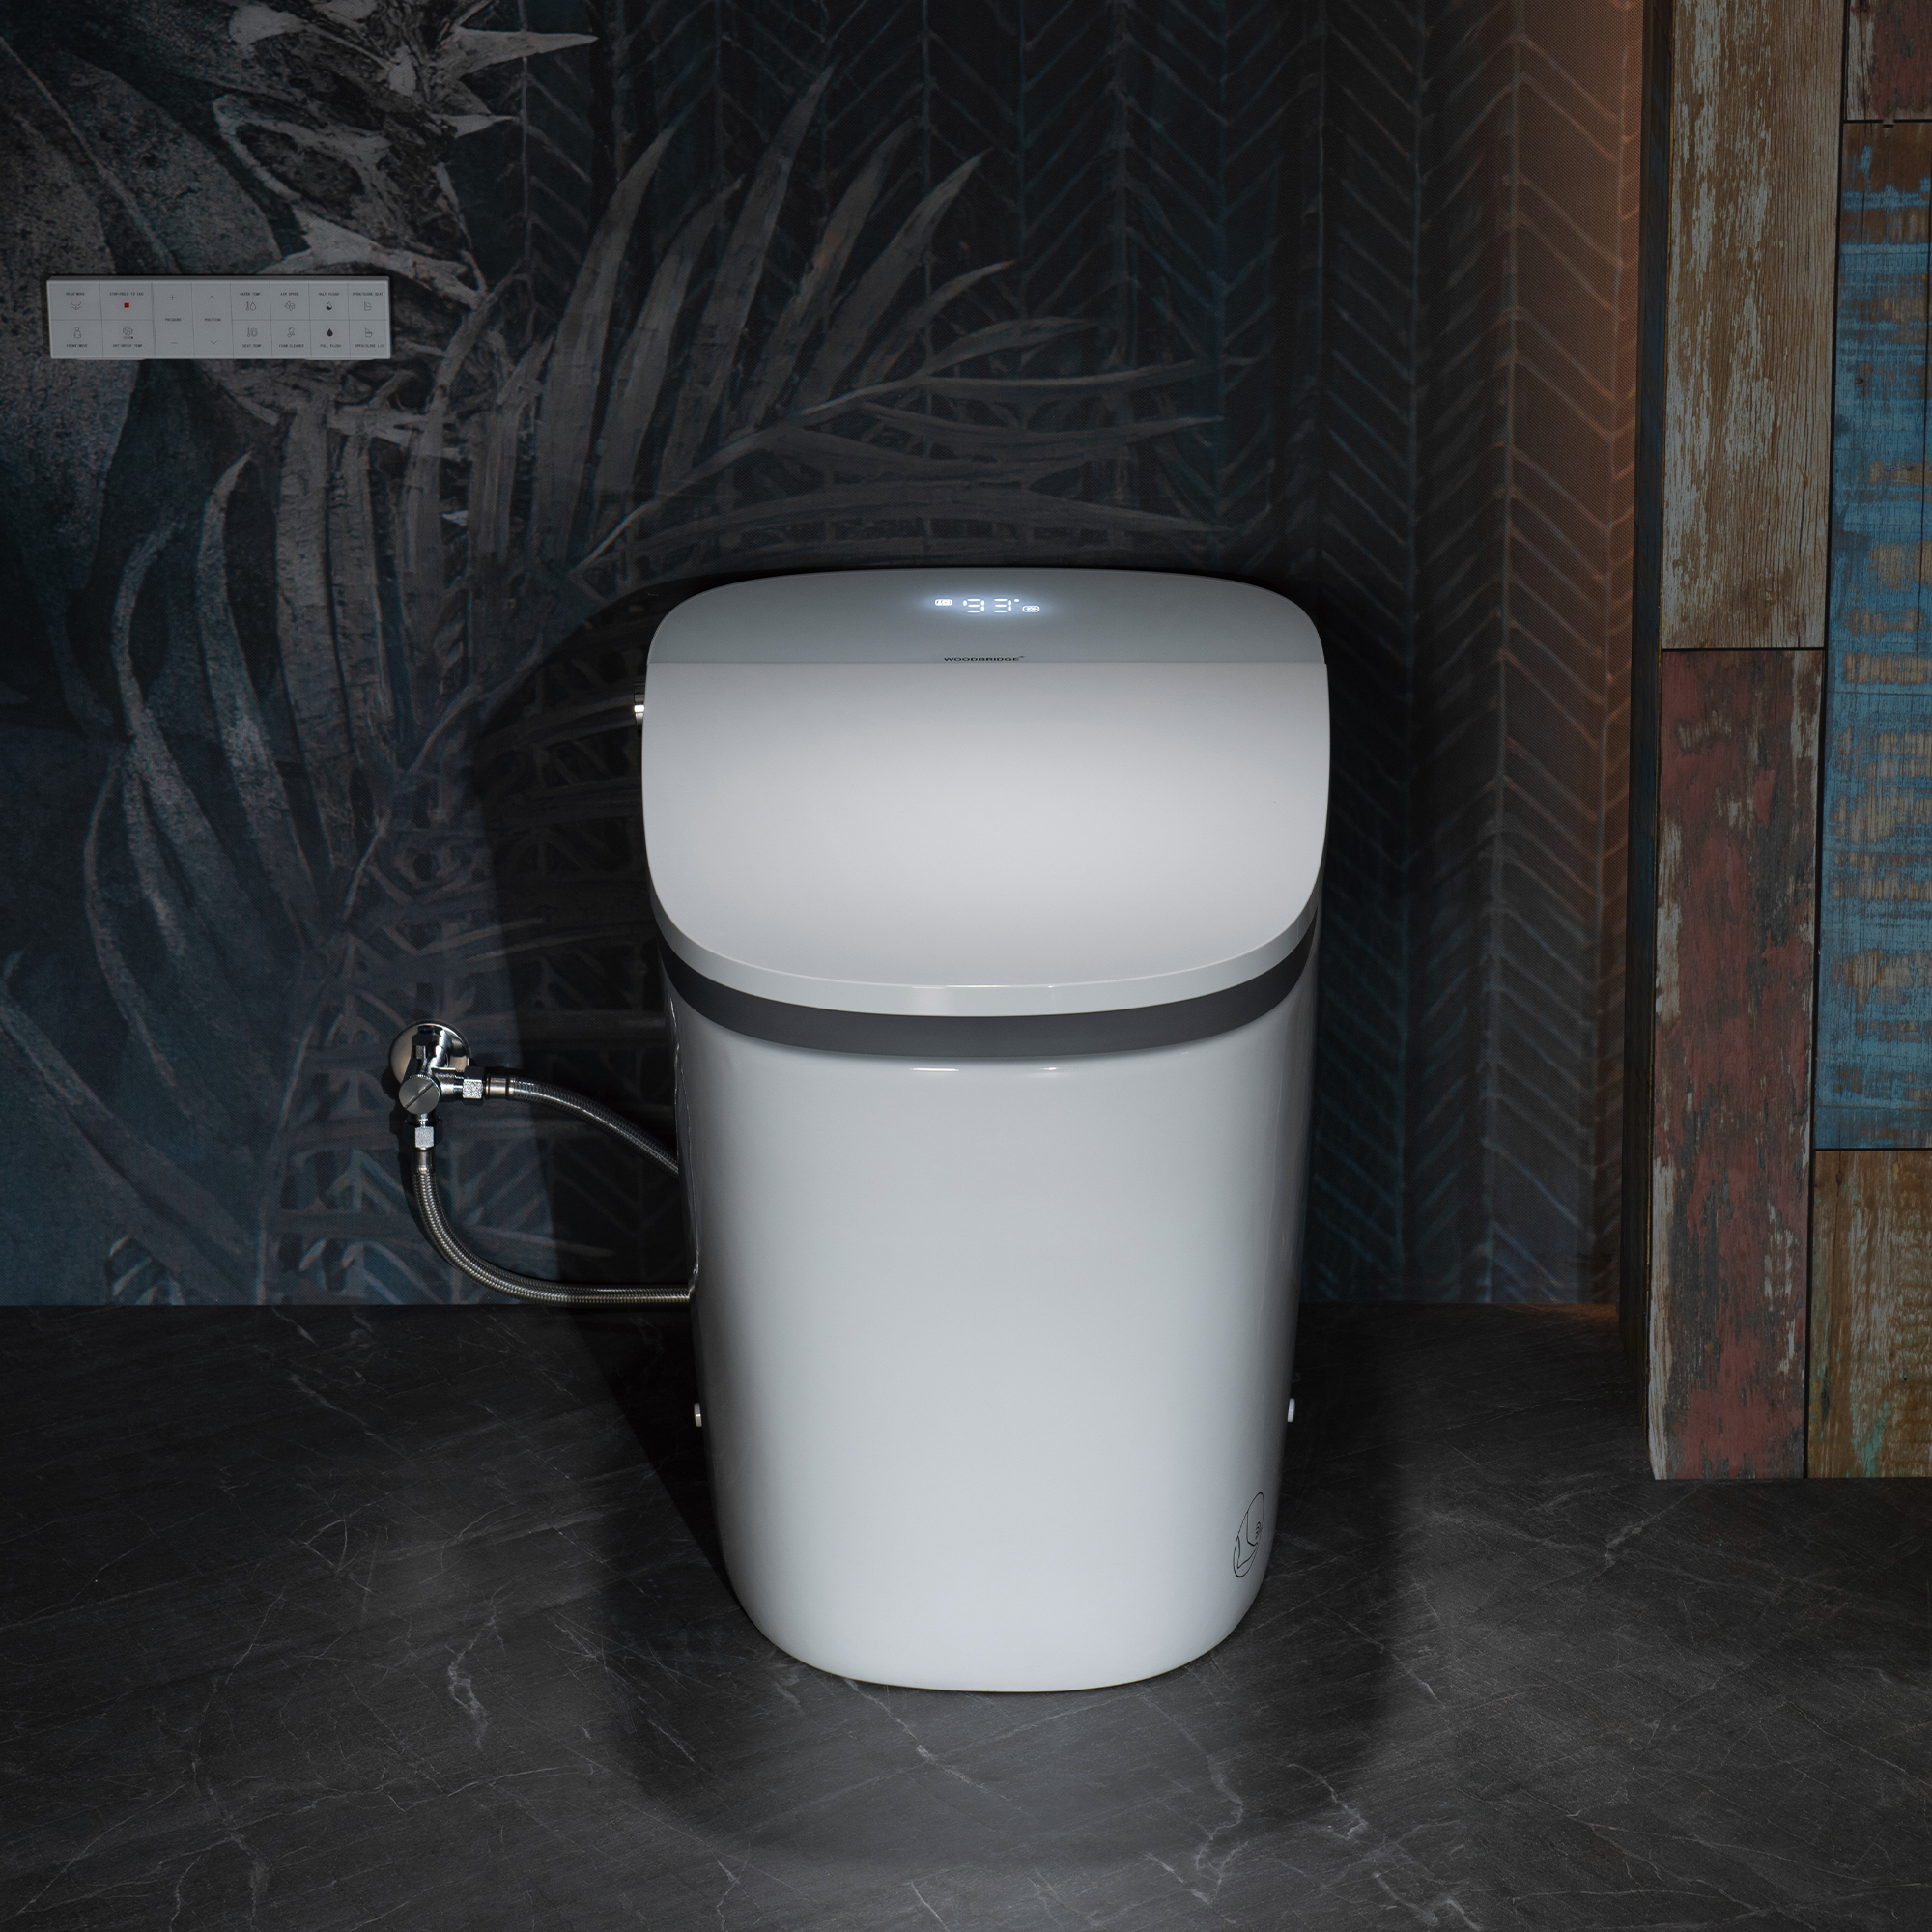  WOODBRIDGE B0931S Smart Bidet Toilet with 1.28 GPF Dual Flush Auto Open & Close, Foot Sensor Flush, Voice Control,1000 Gram Map Flushing Score, LED Display, Chair Height Design and Cleaning Foam Dispenser_13916